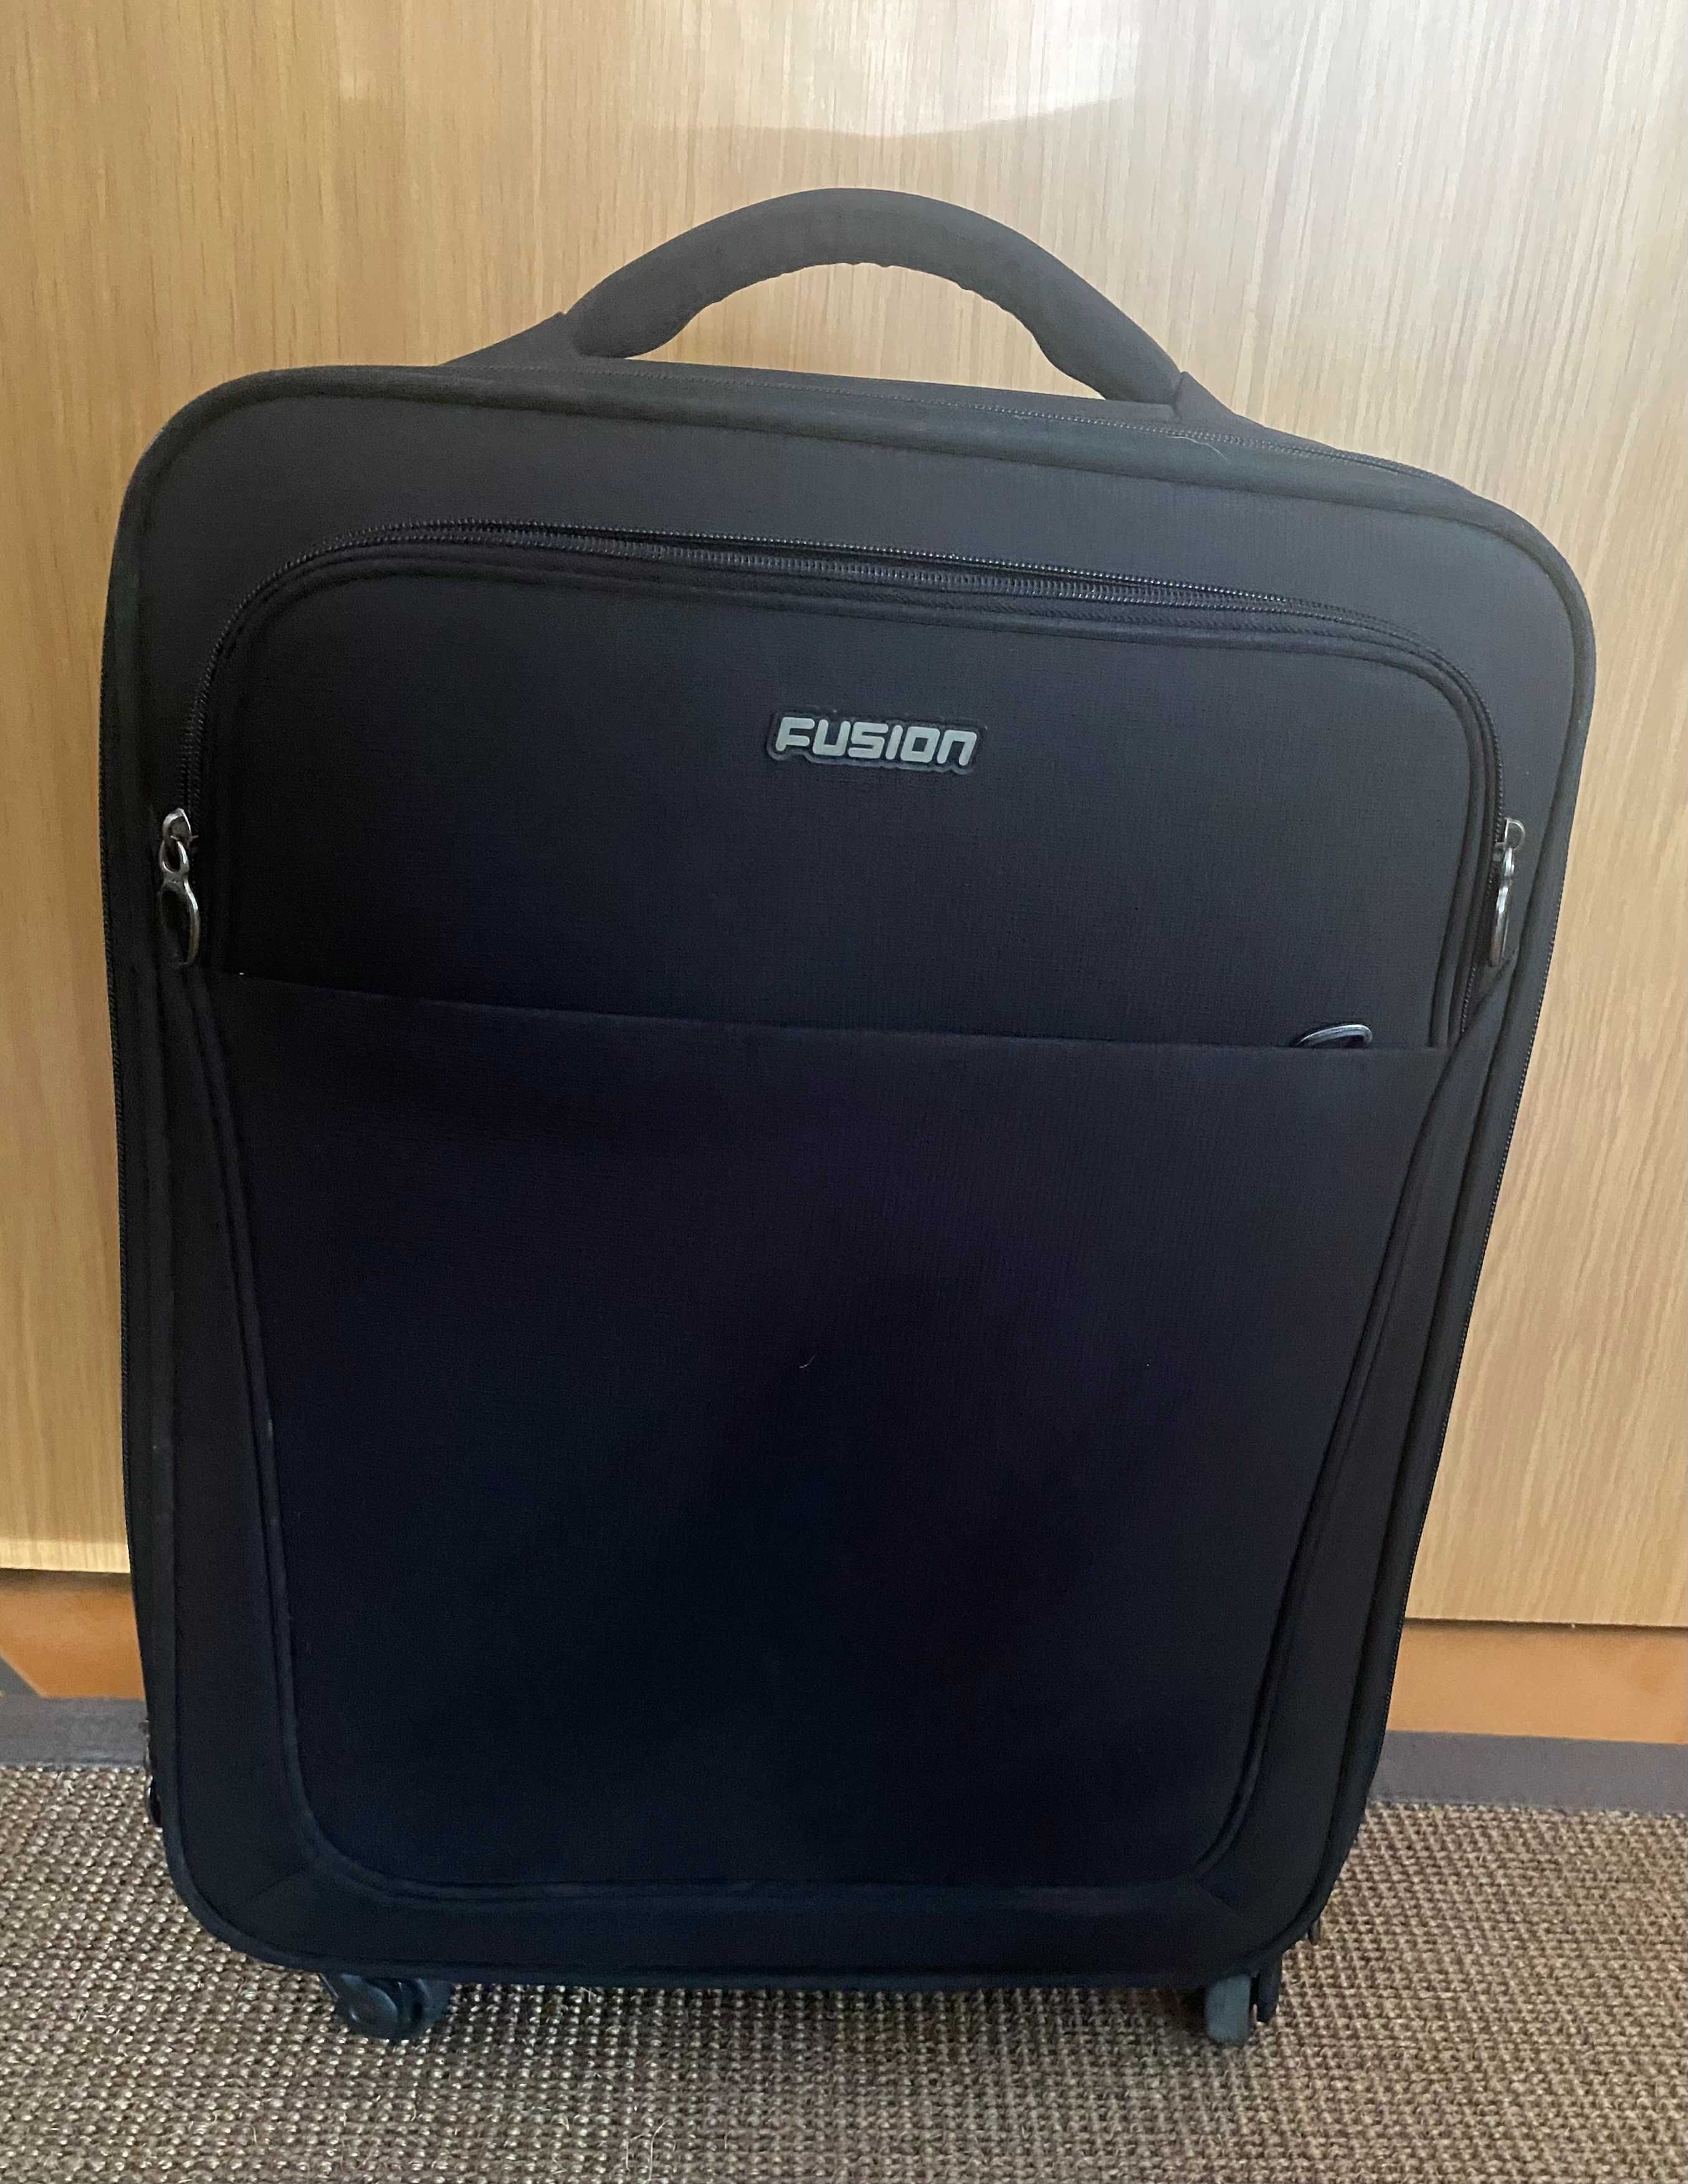 Black carry-on luggage bag